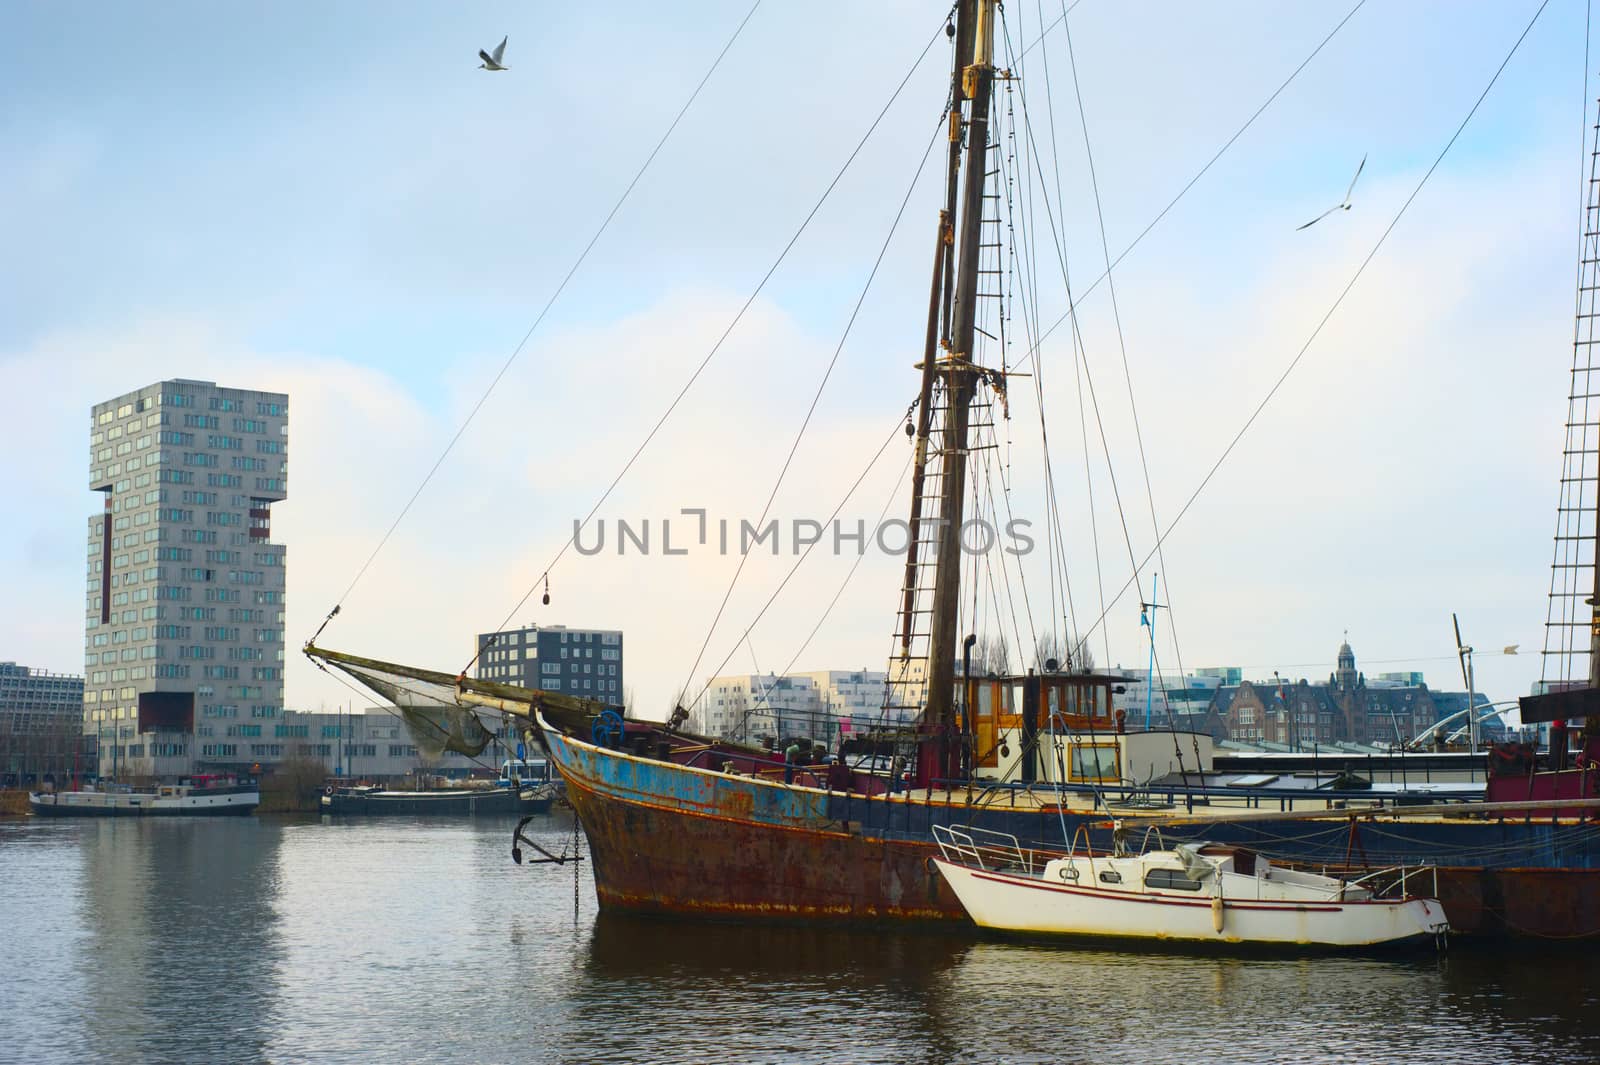 Rusty ship in Amsterdam harbor by joyfull